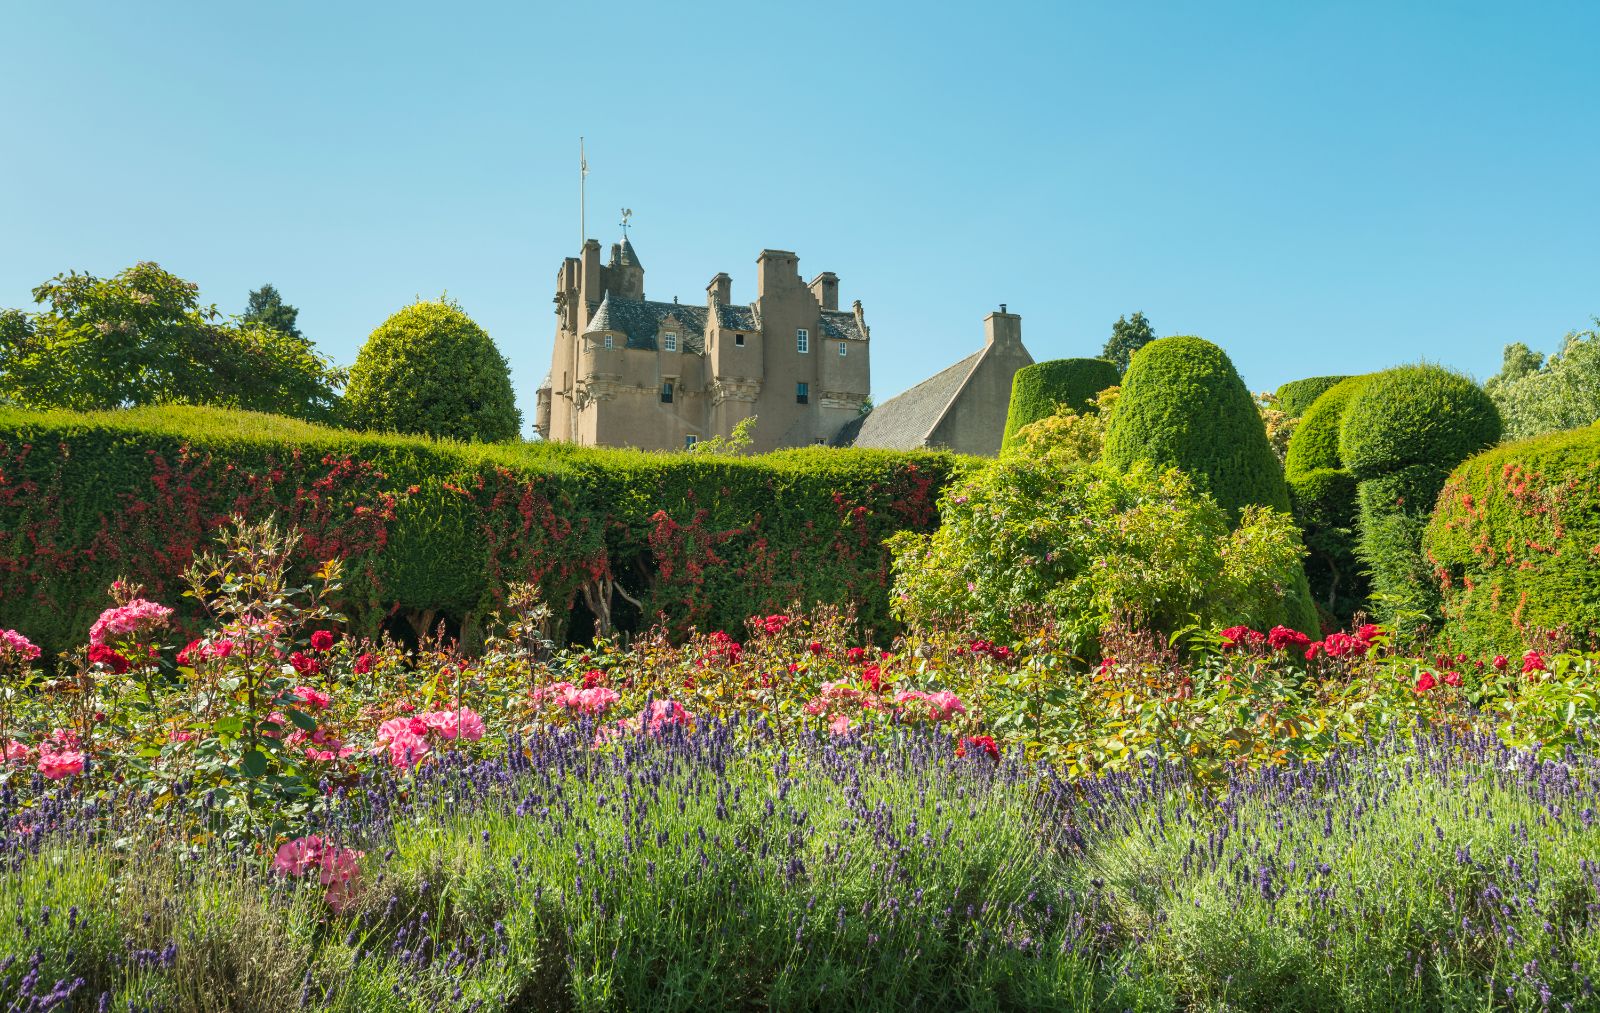 Gardens of Craithes Castle in Scotland